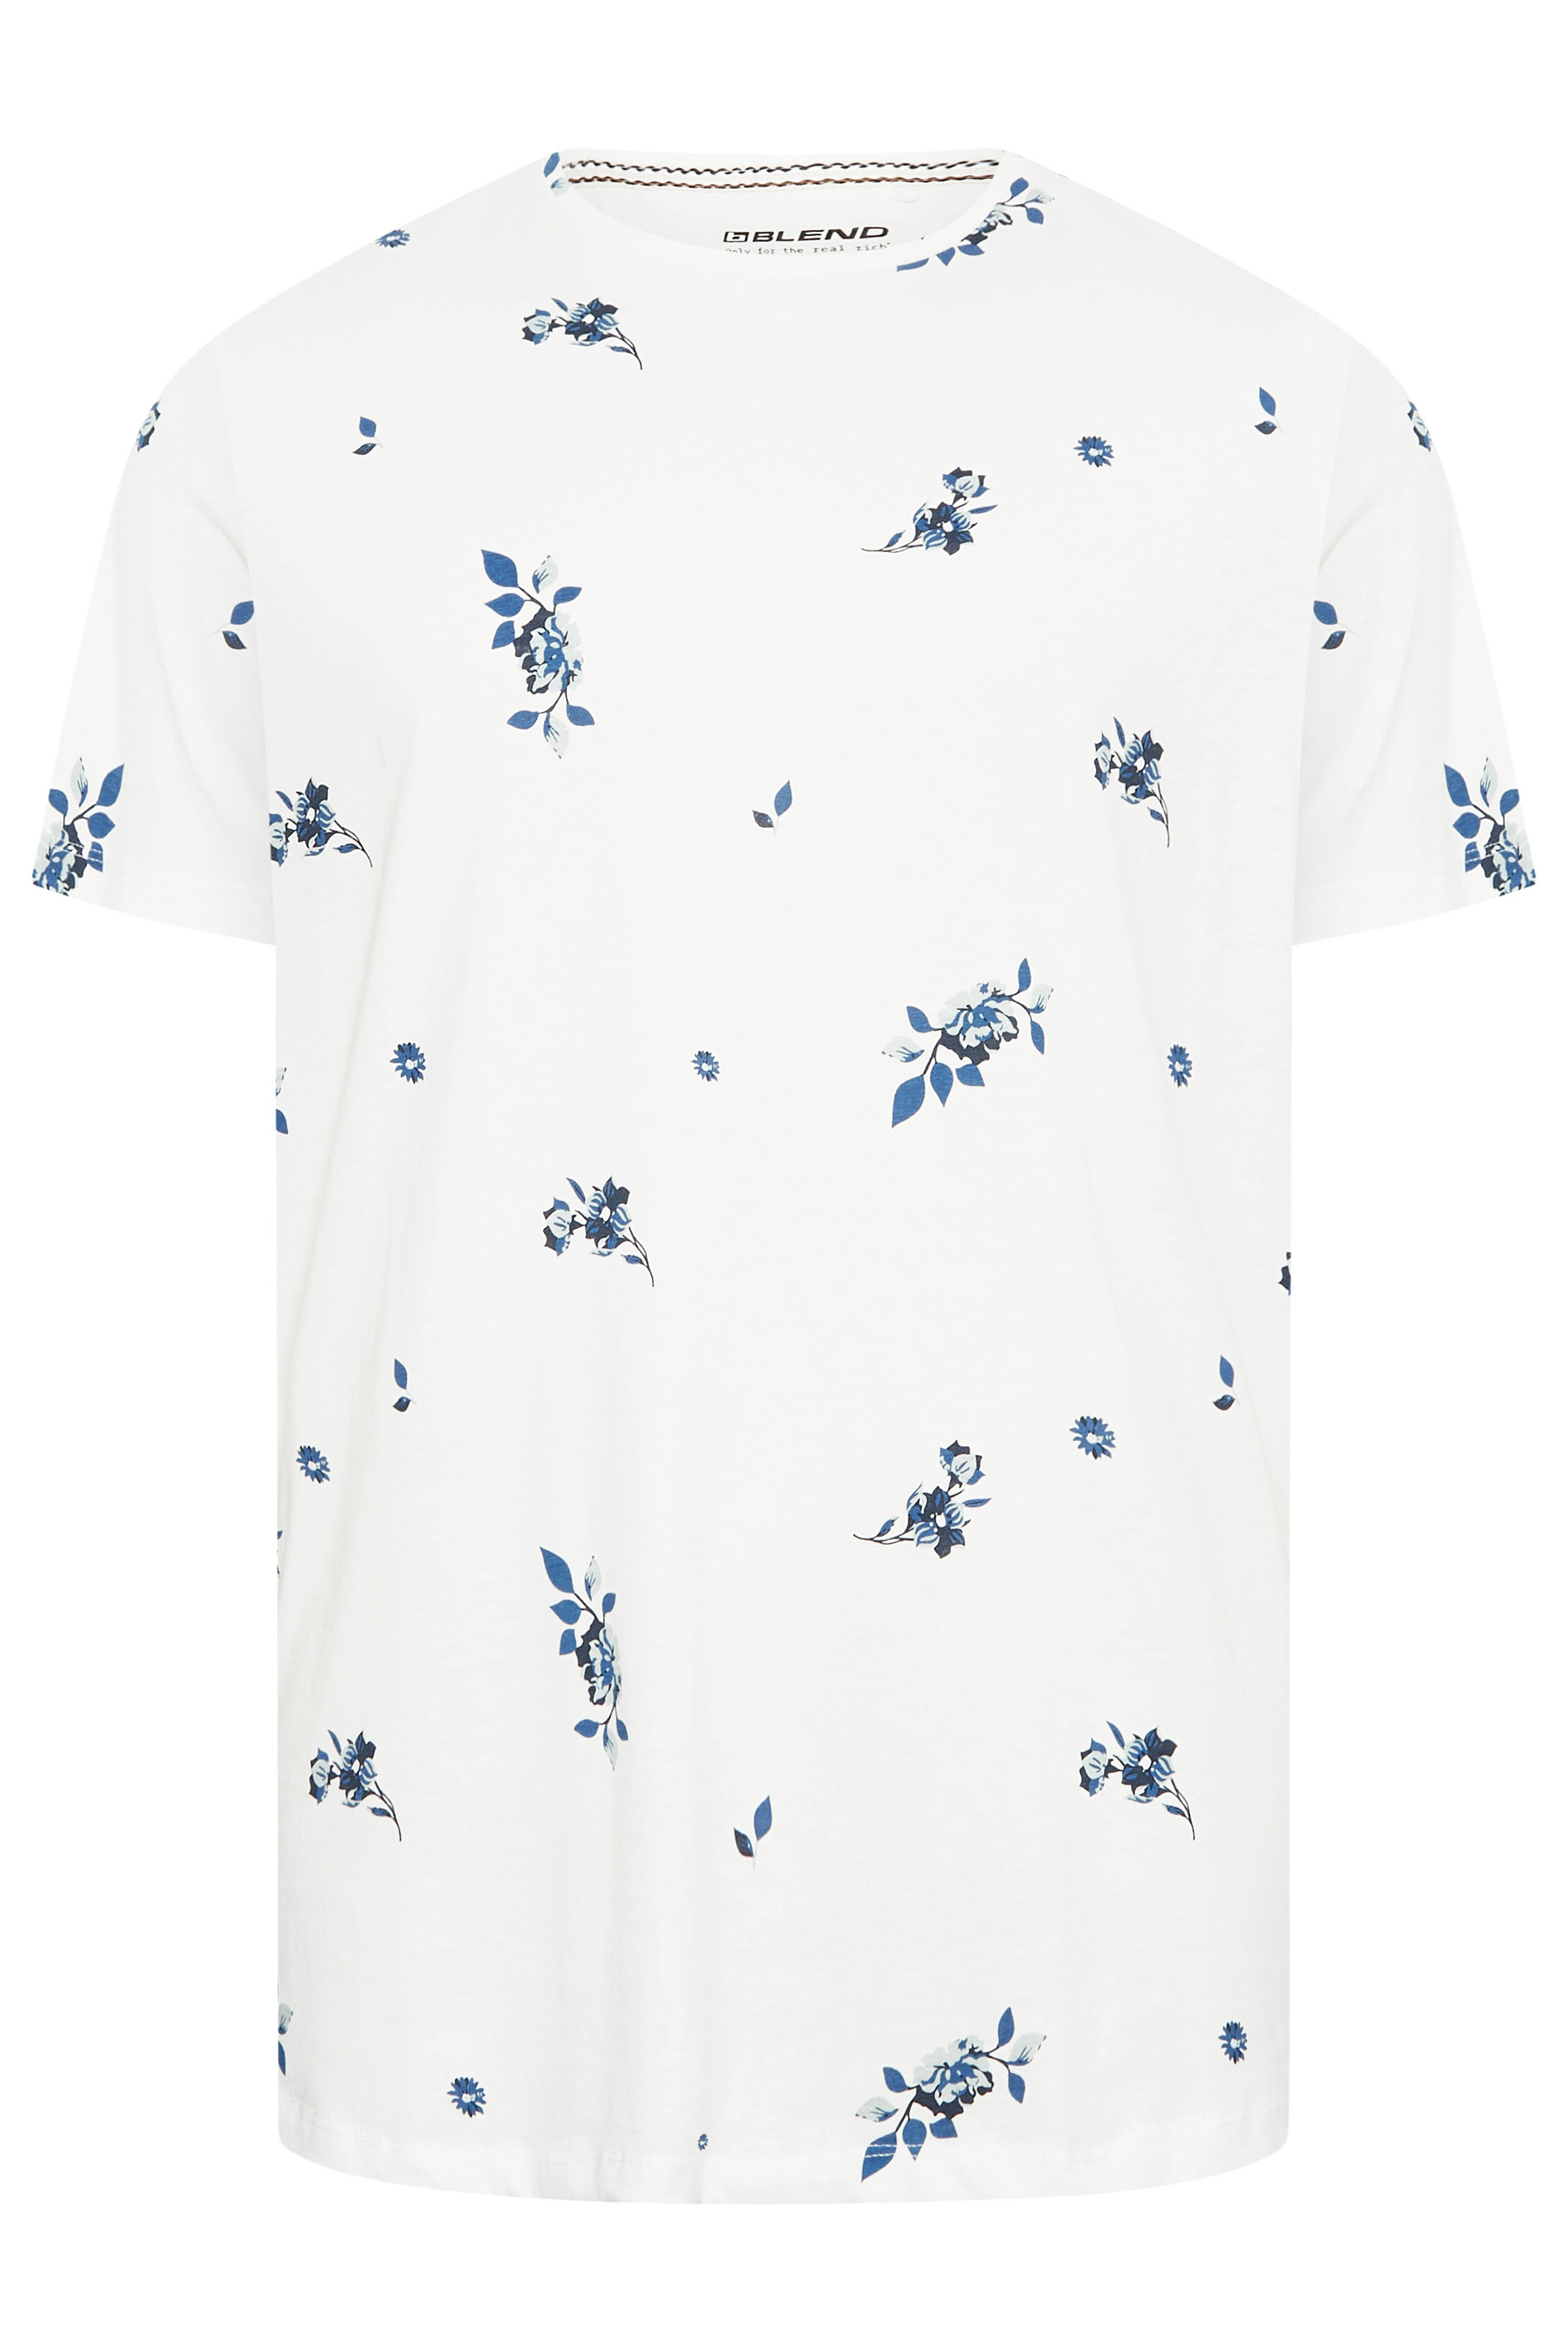 BLEND Big & Tall White Floral T-Shirt | BadRhino 3